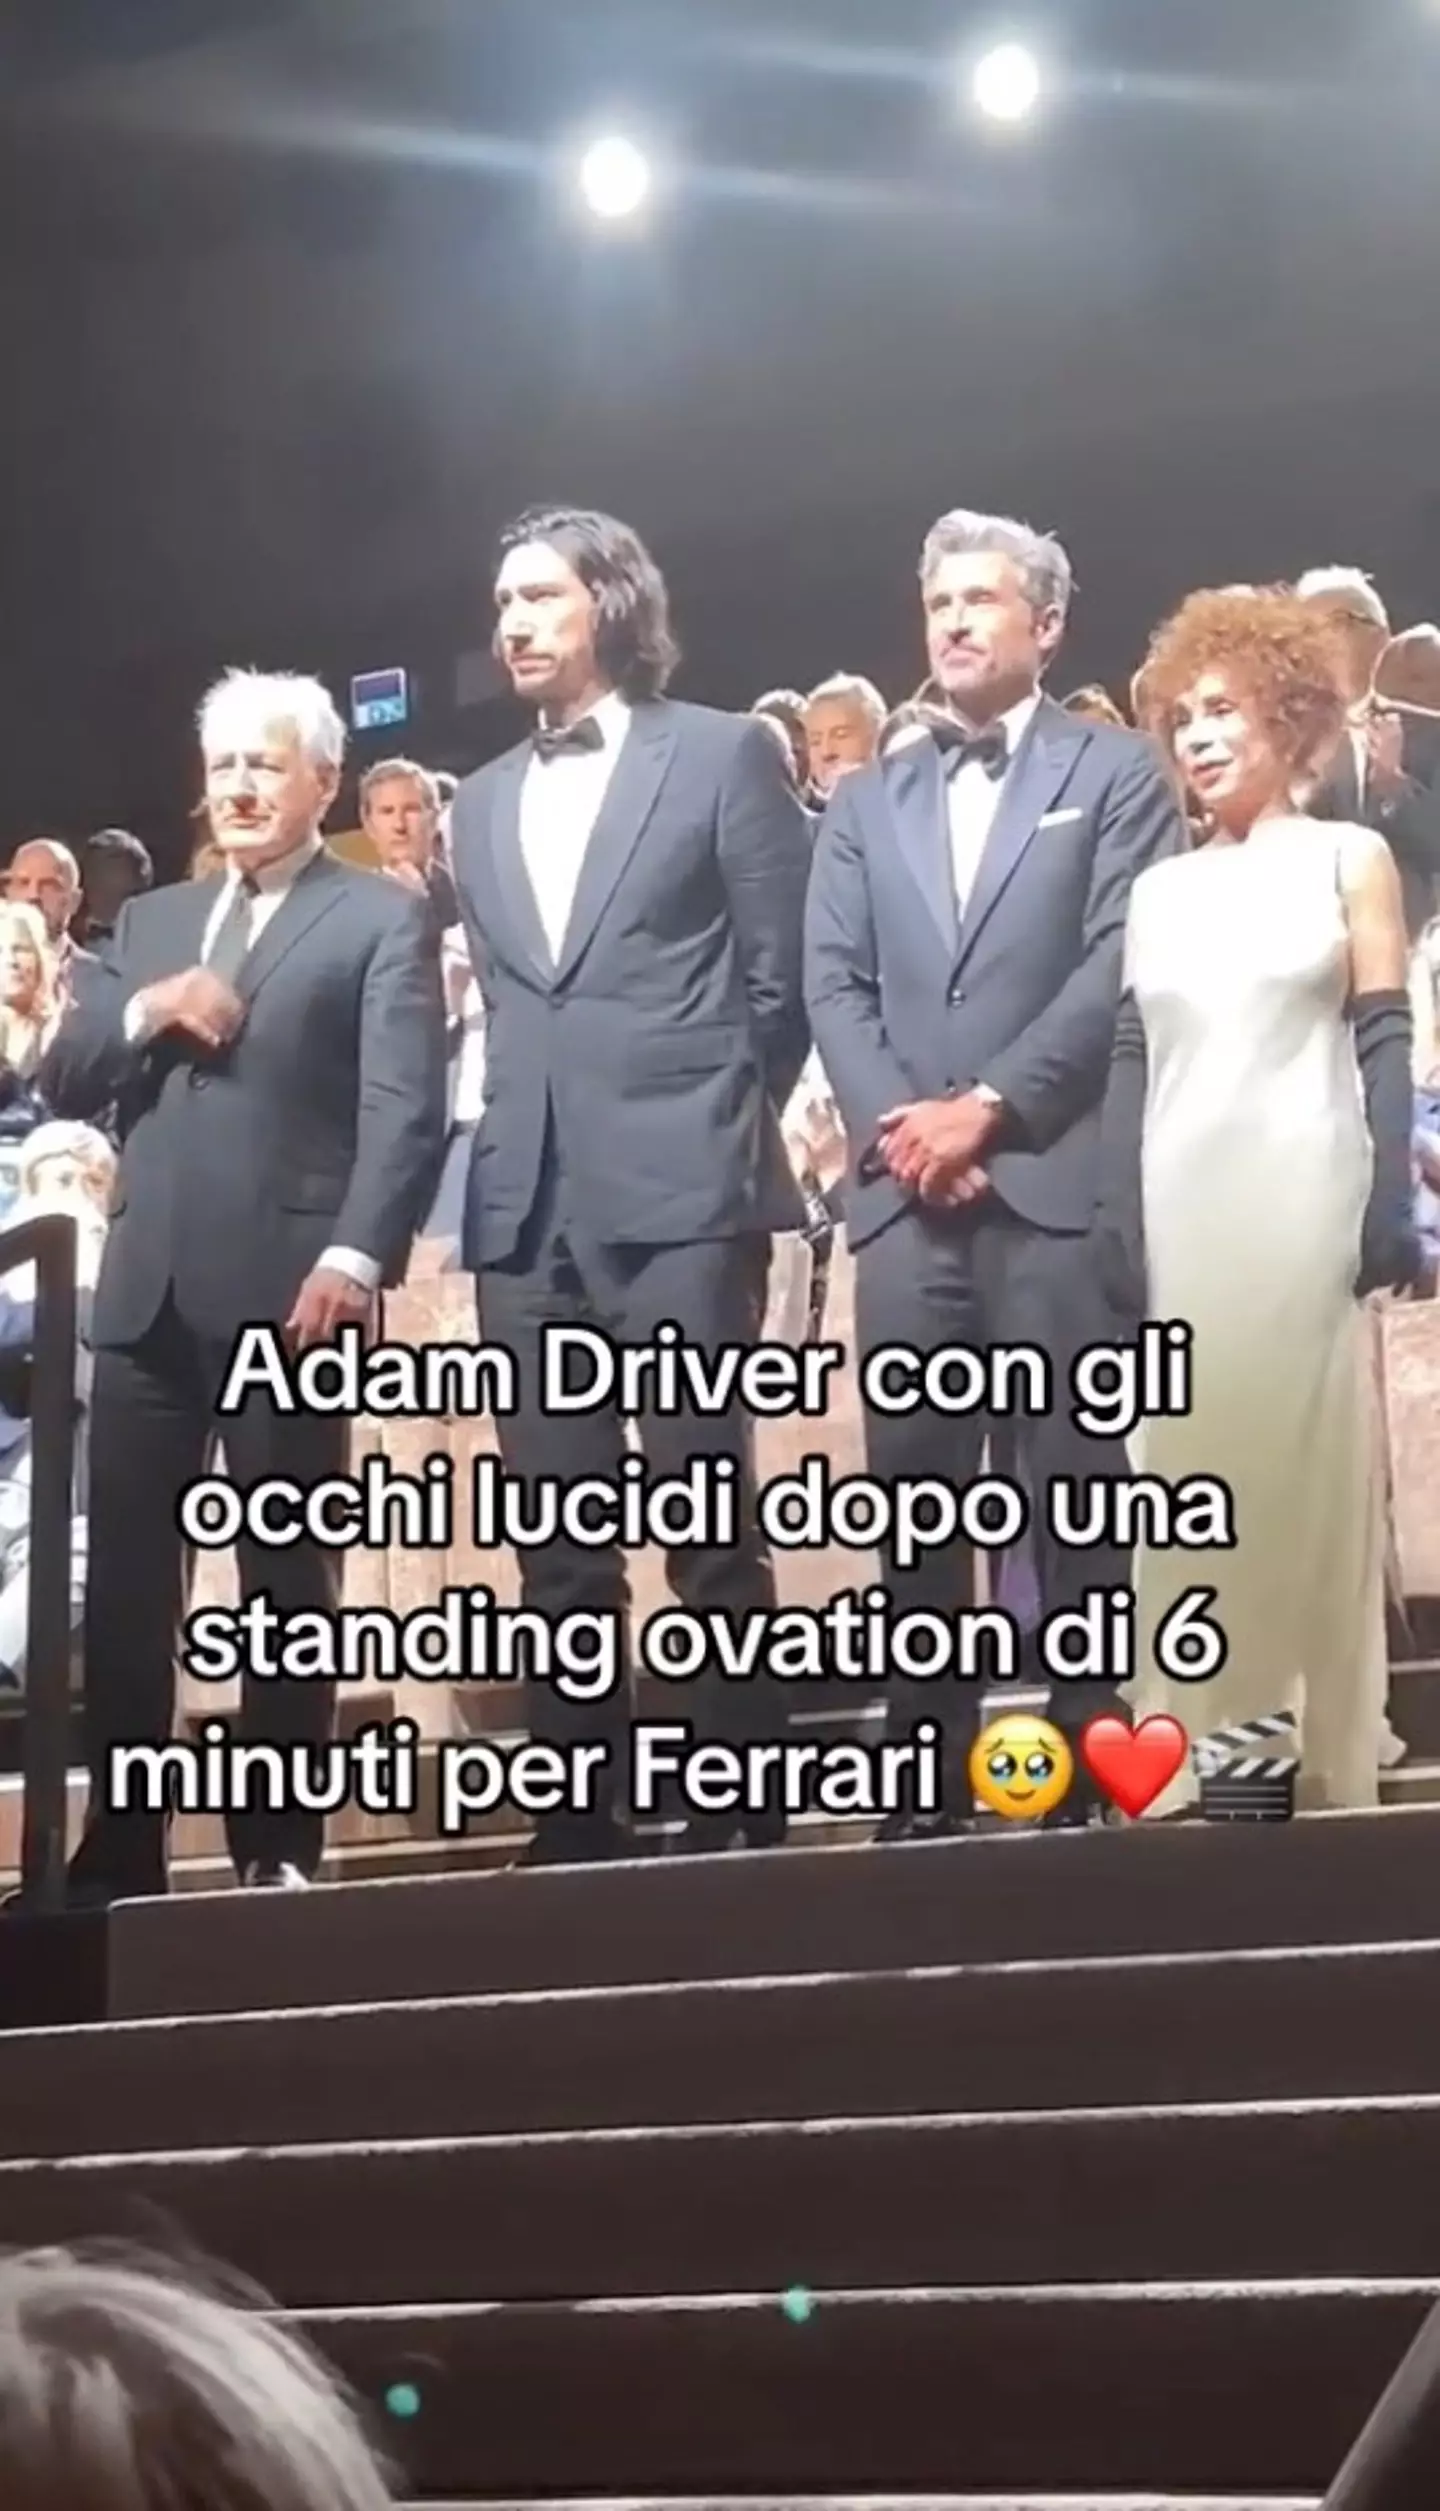 Driver got a 7-minute standing ovation at Venice Film Festival for his portrayal of Enzo Ferrari in Ferrari.